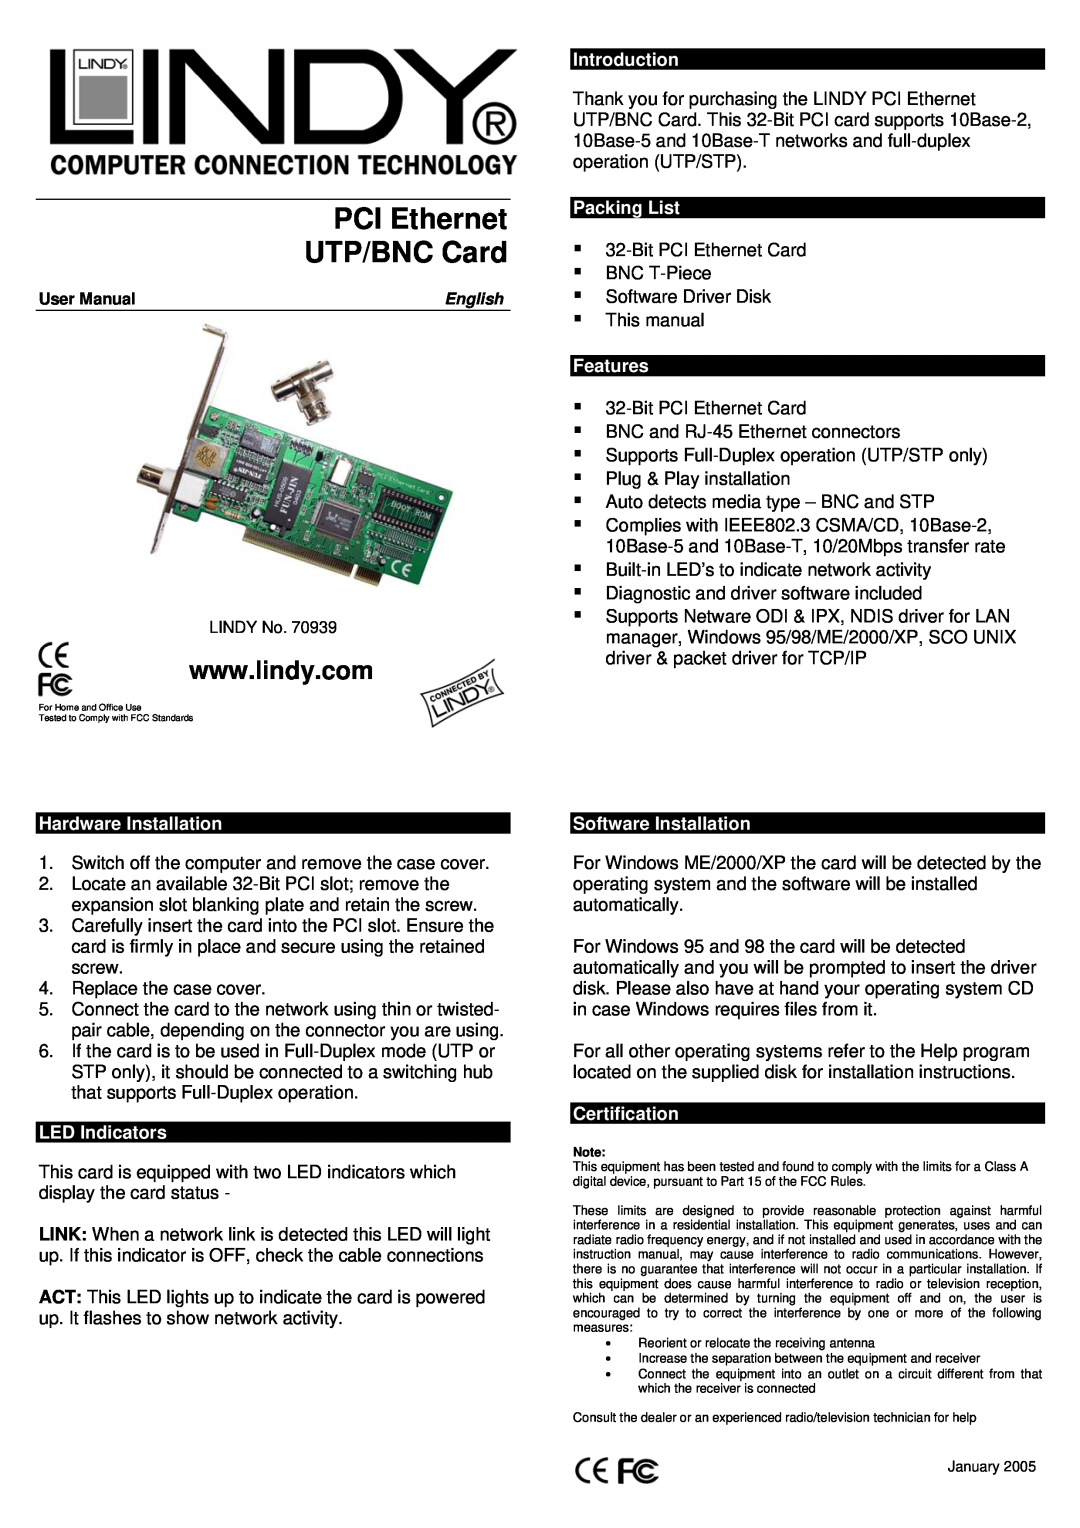 Lindy 70939 user manual PCI Ethernet UTP/BNC Card, Hardware Installation, LED Indicators, Introduction, Packing List 